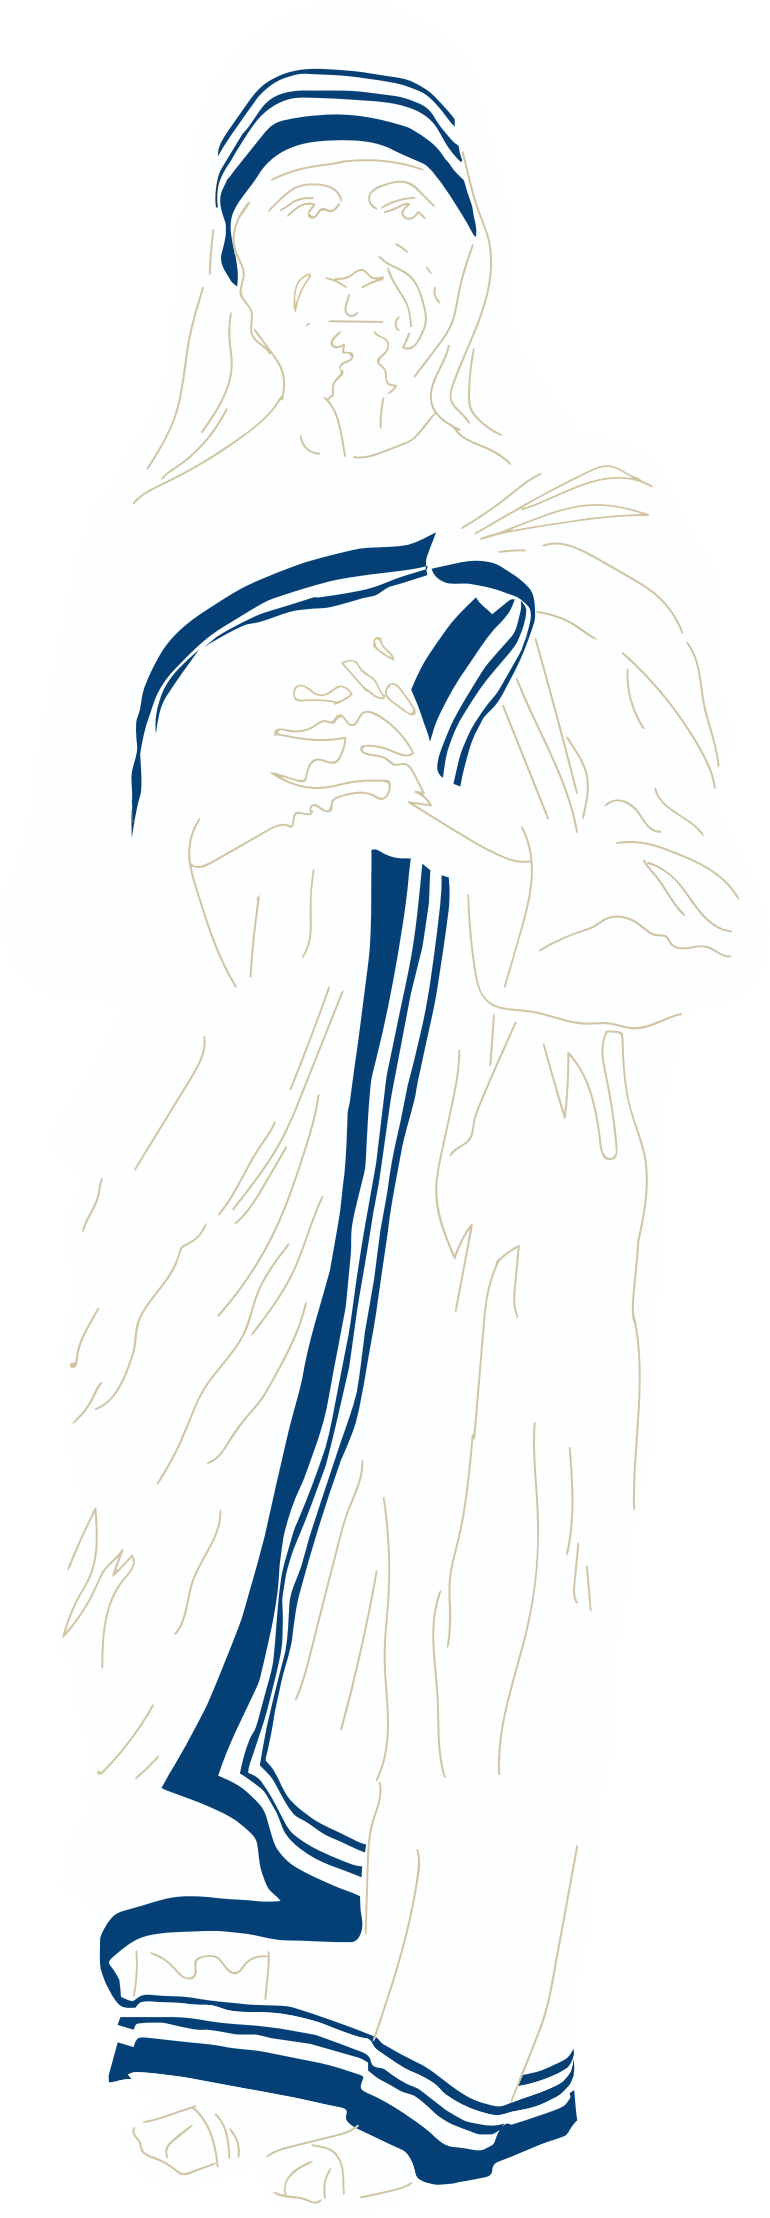 Big Image - Saint Teresa Of Calcutta Outline (770x2218)